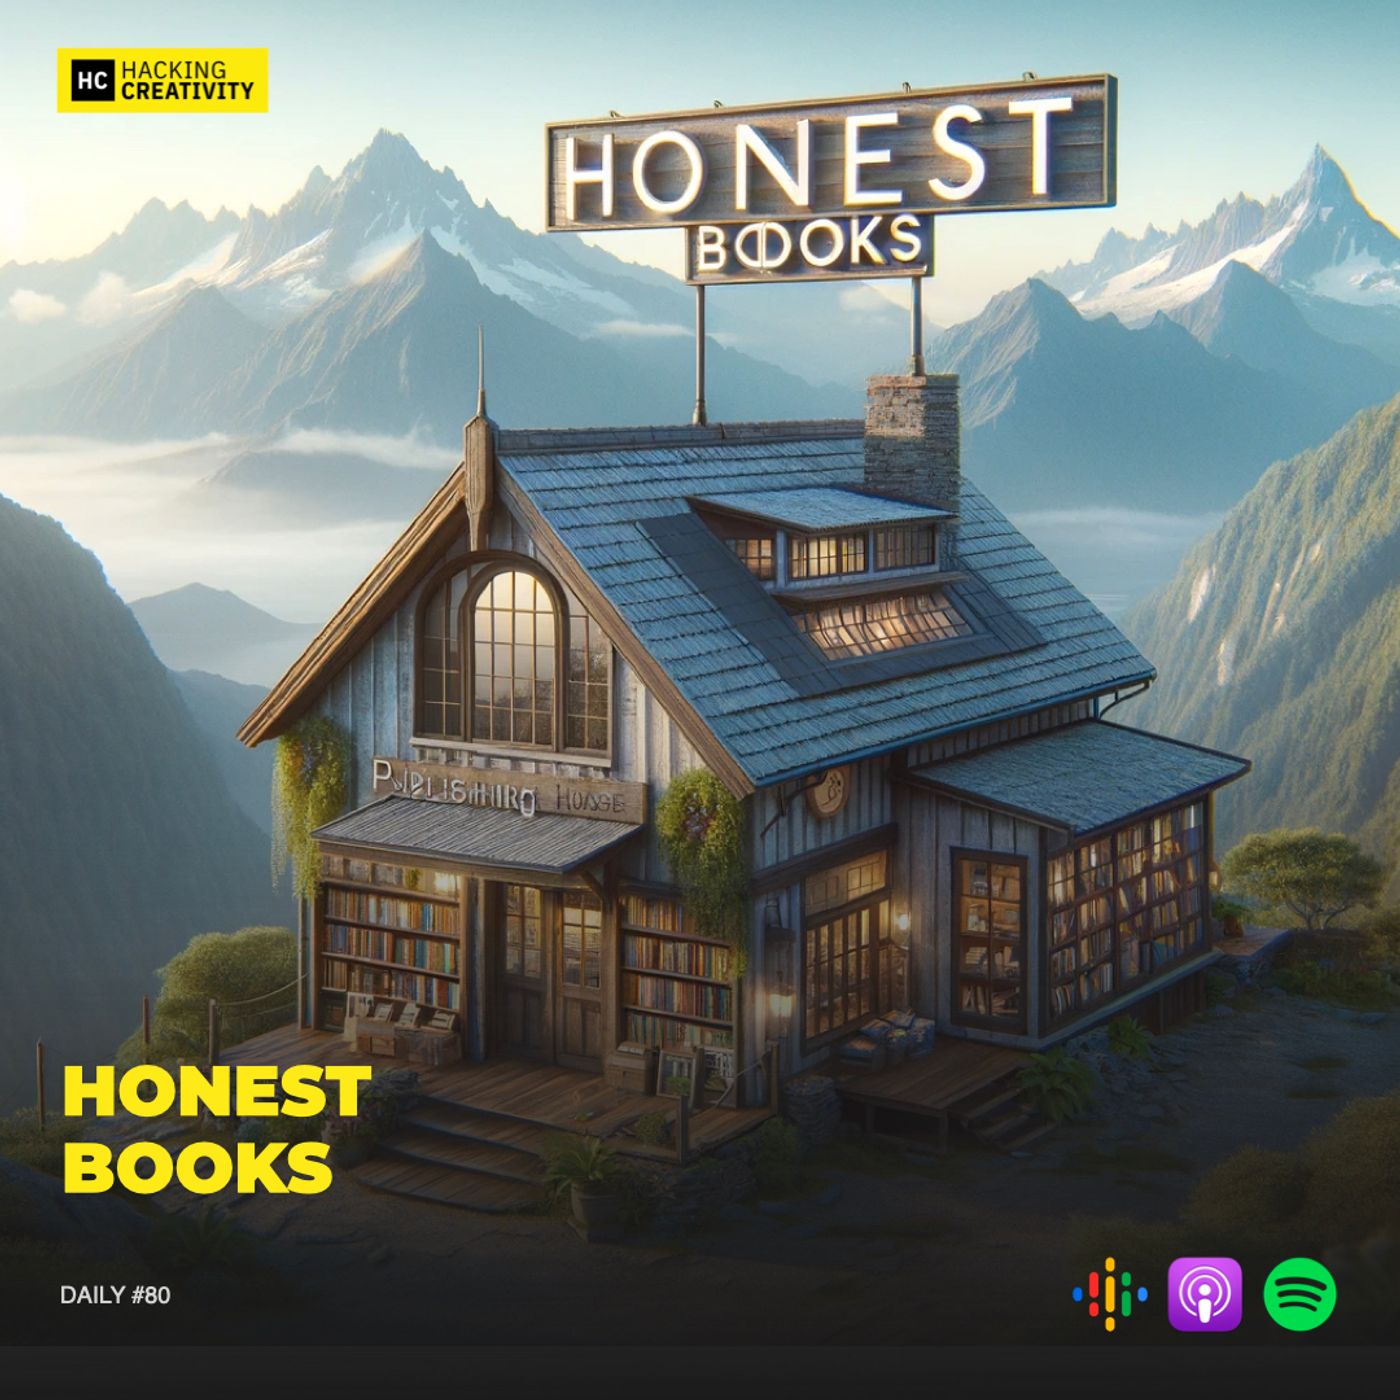 250 - Honest books (DAILY)